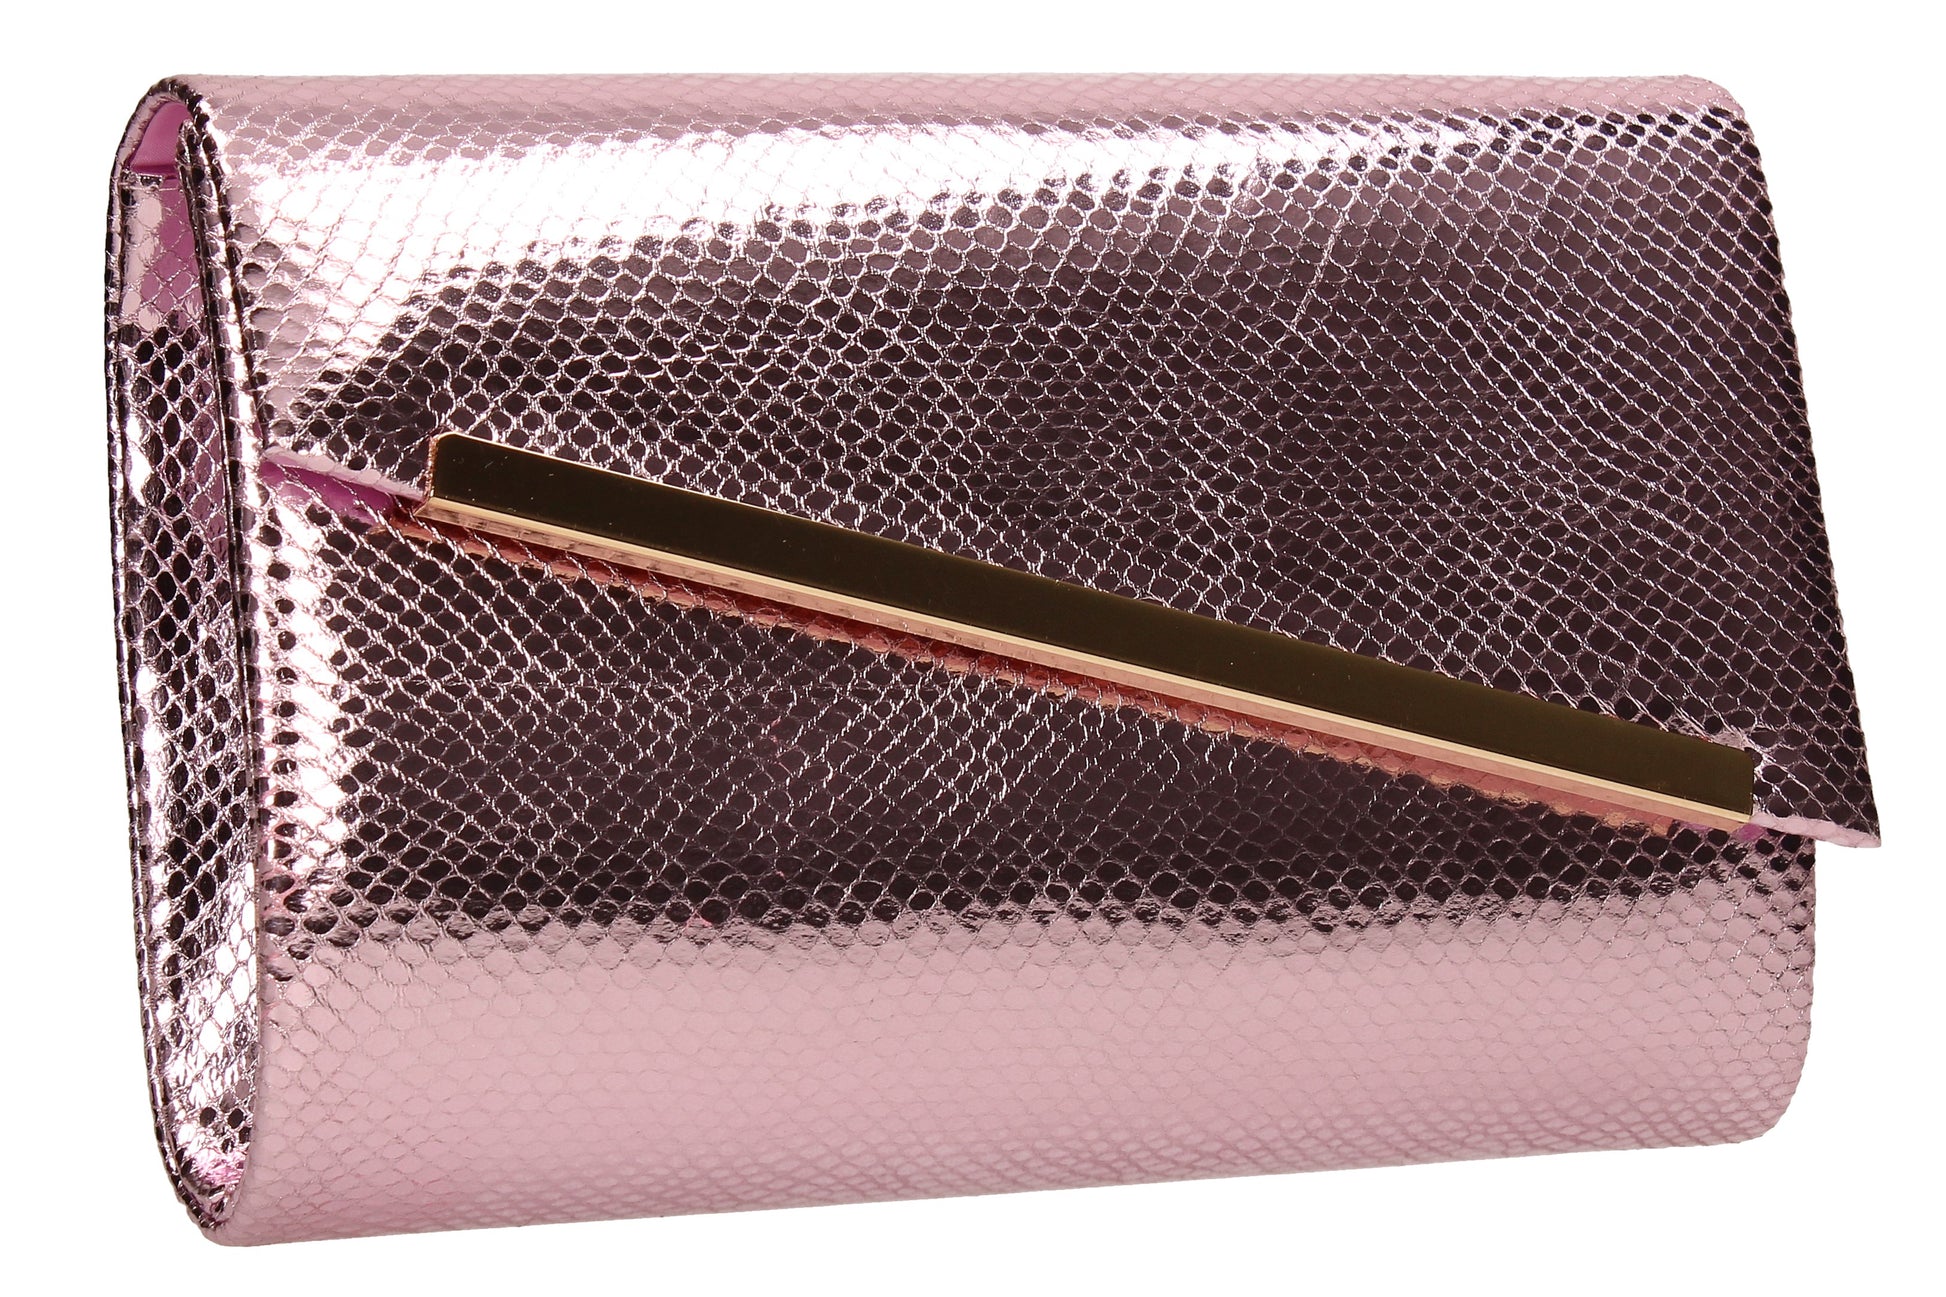 SWANKYSWANS Isla Snakeskin Shiny Clutch Pink Cute Cheap Clutch Bag For Weddings School and Work